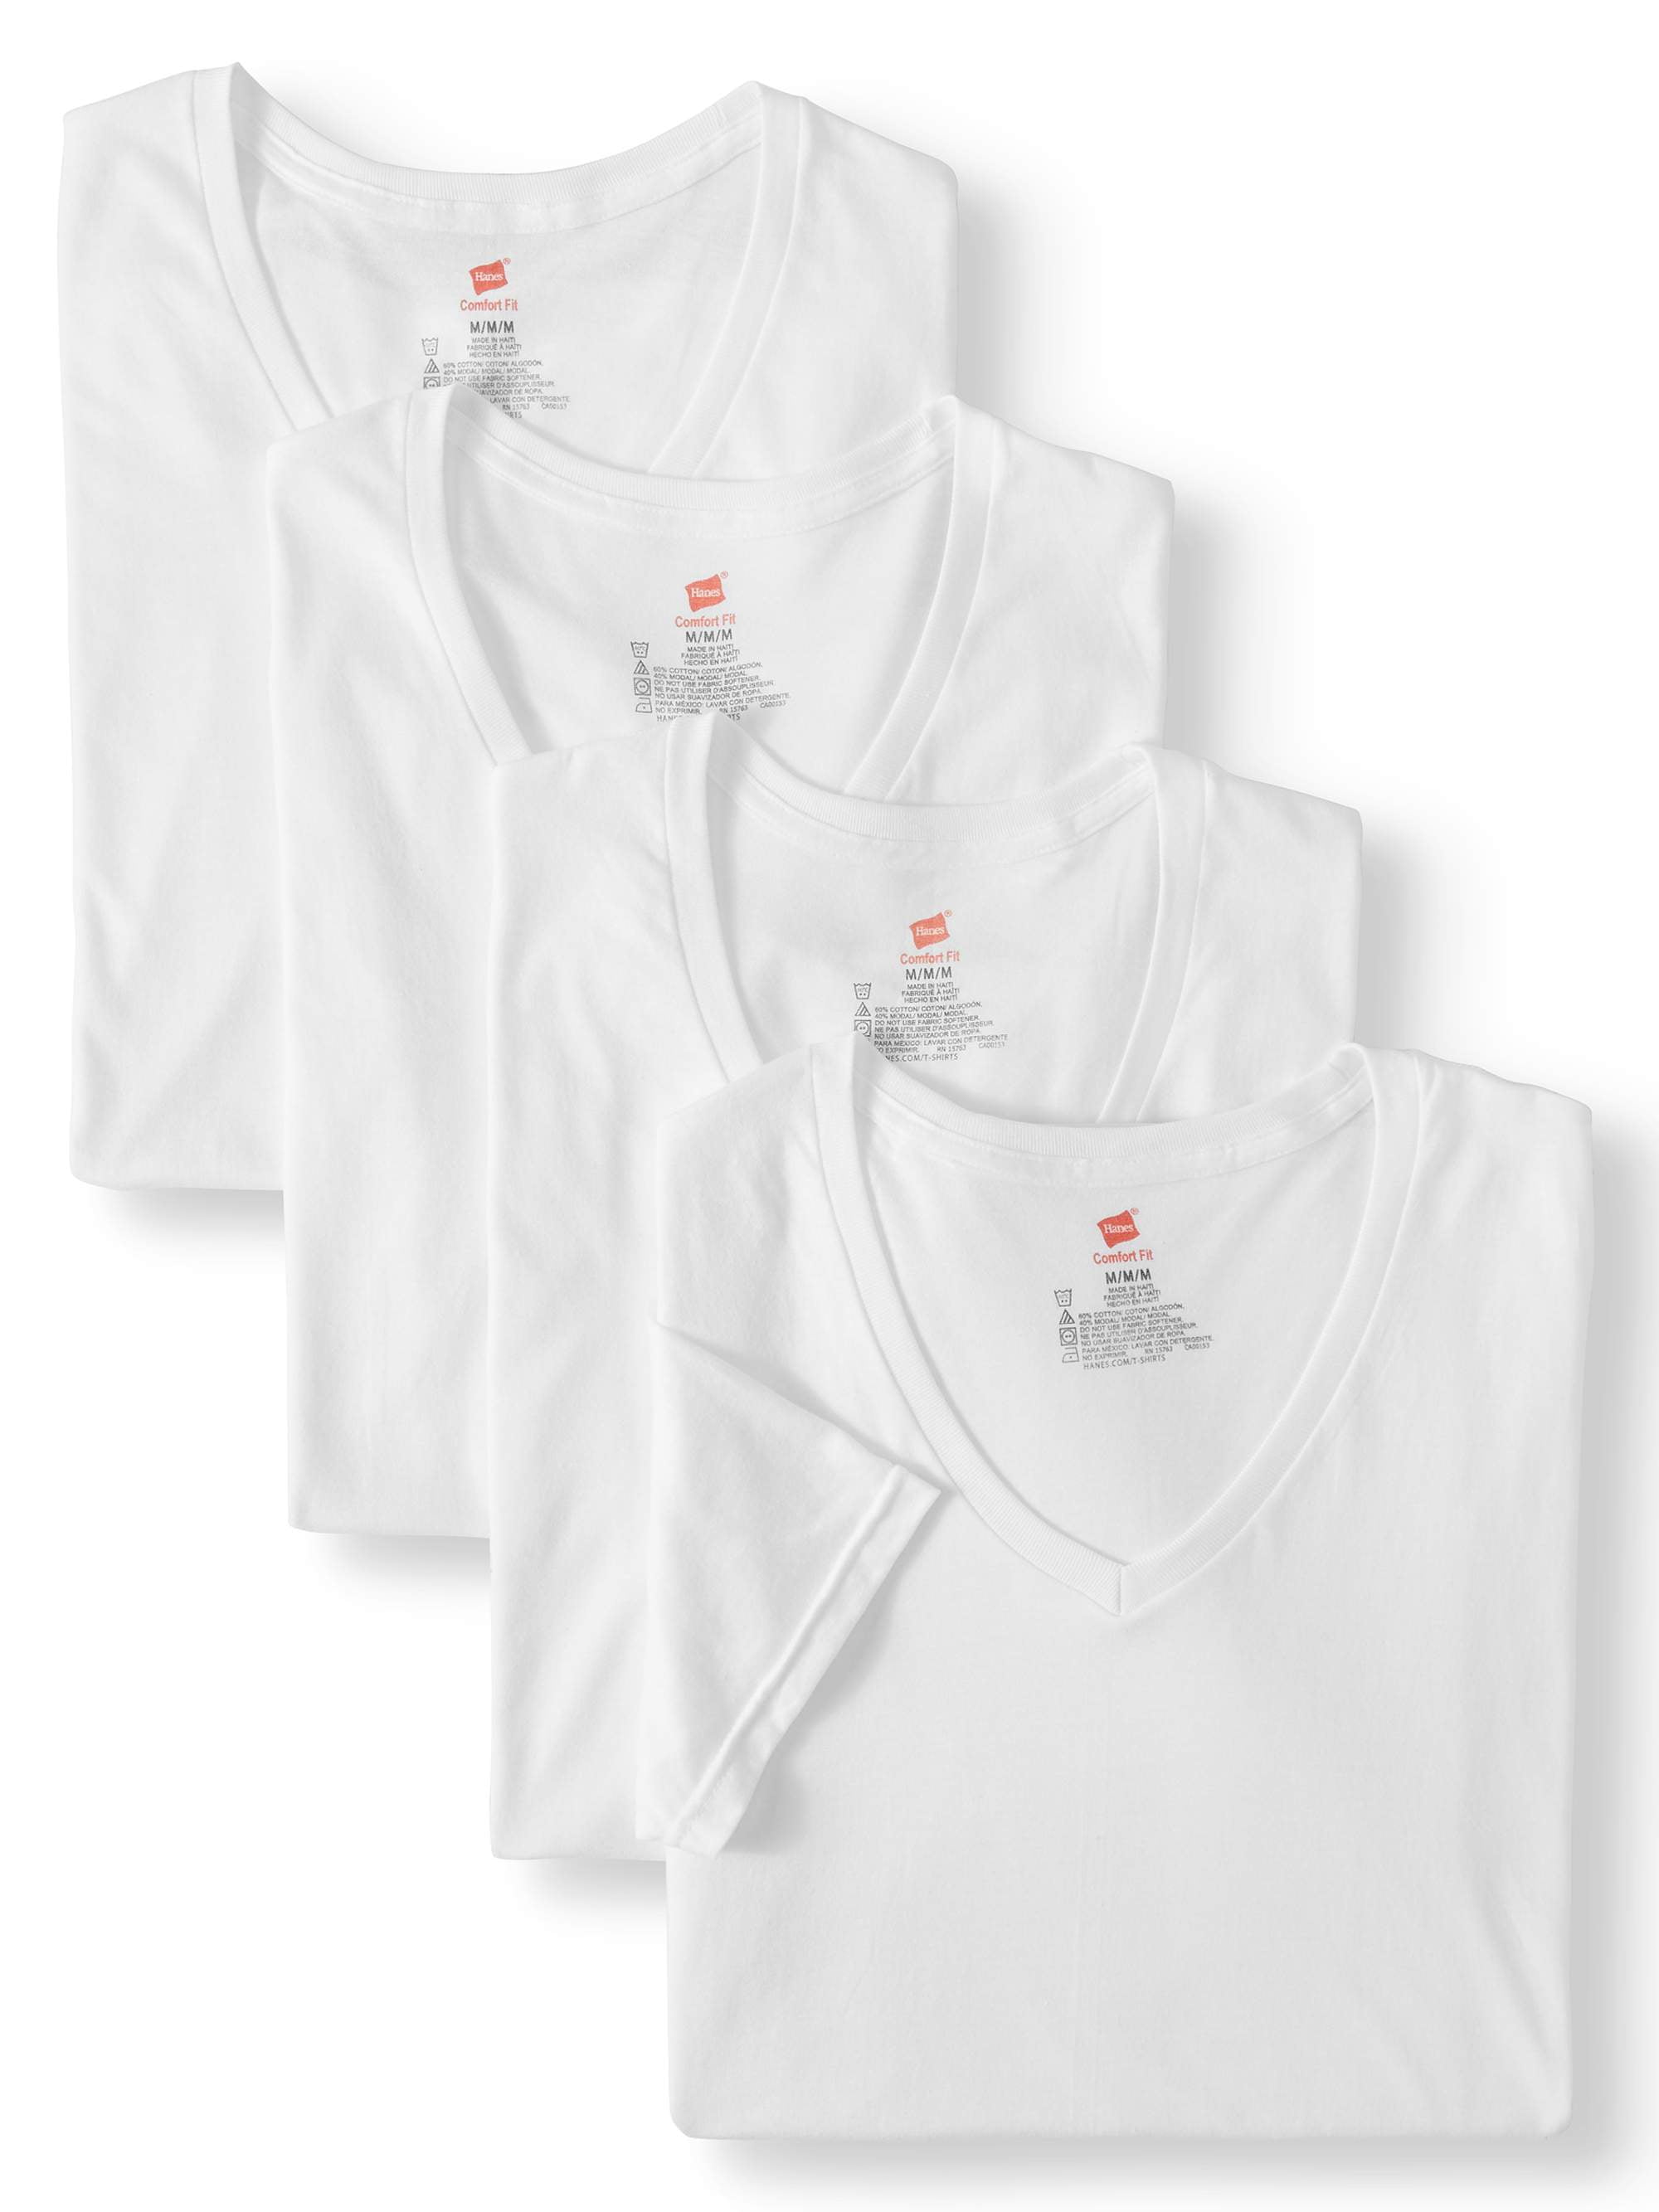 Men's Comfort Fit White V-Neck T-Shirt, 4 Pack - Walmart.com